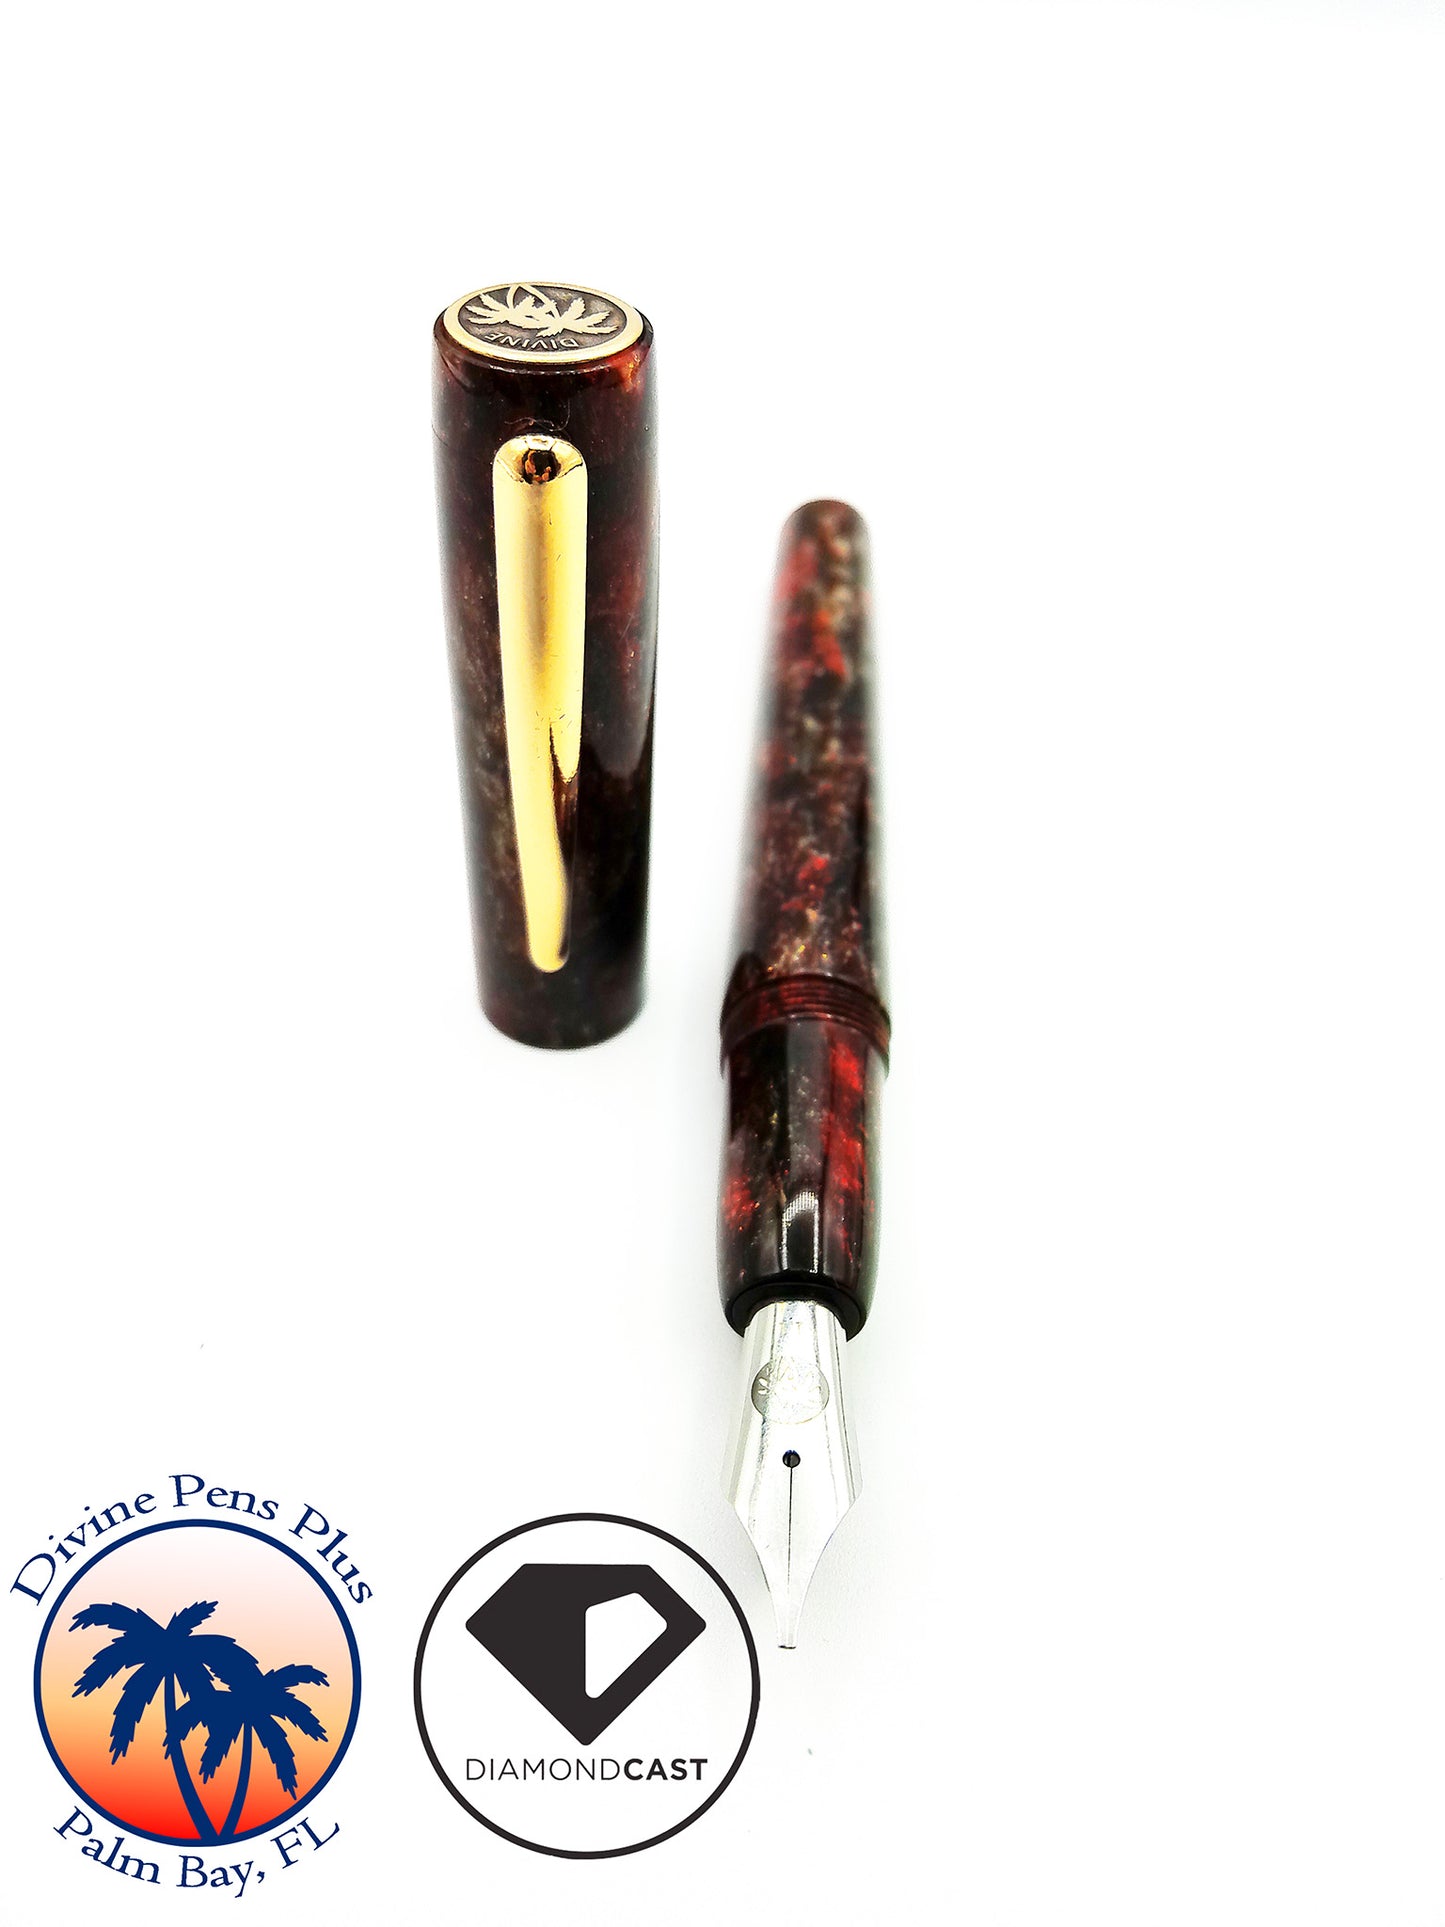 Agape Fountain Pen - "Red Dragon" DiamondCast™